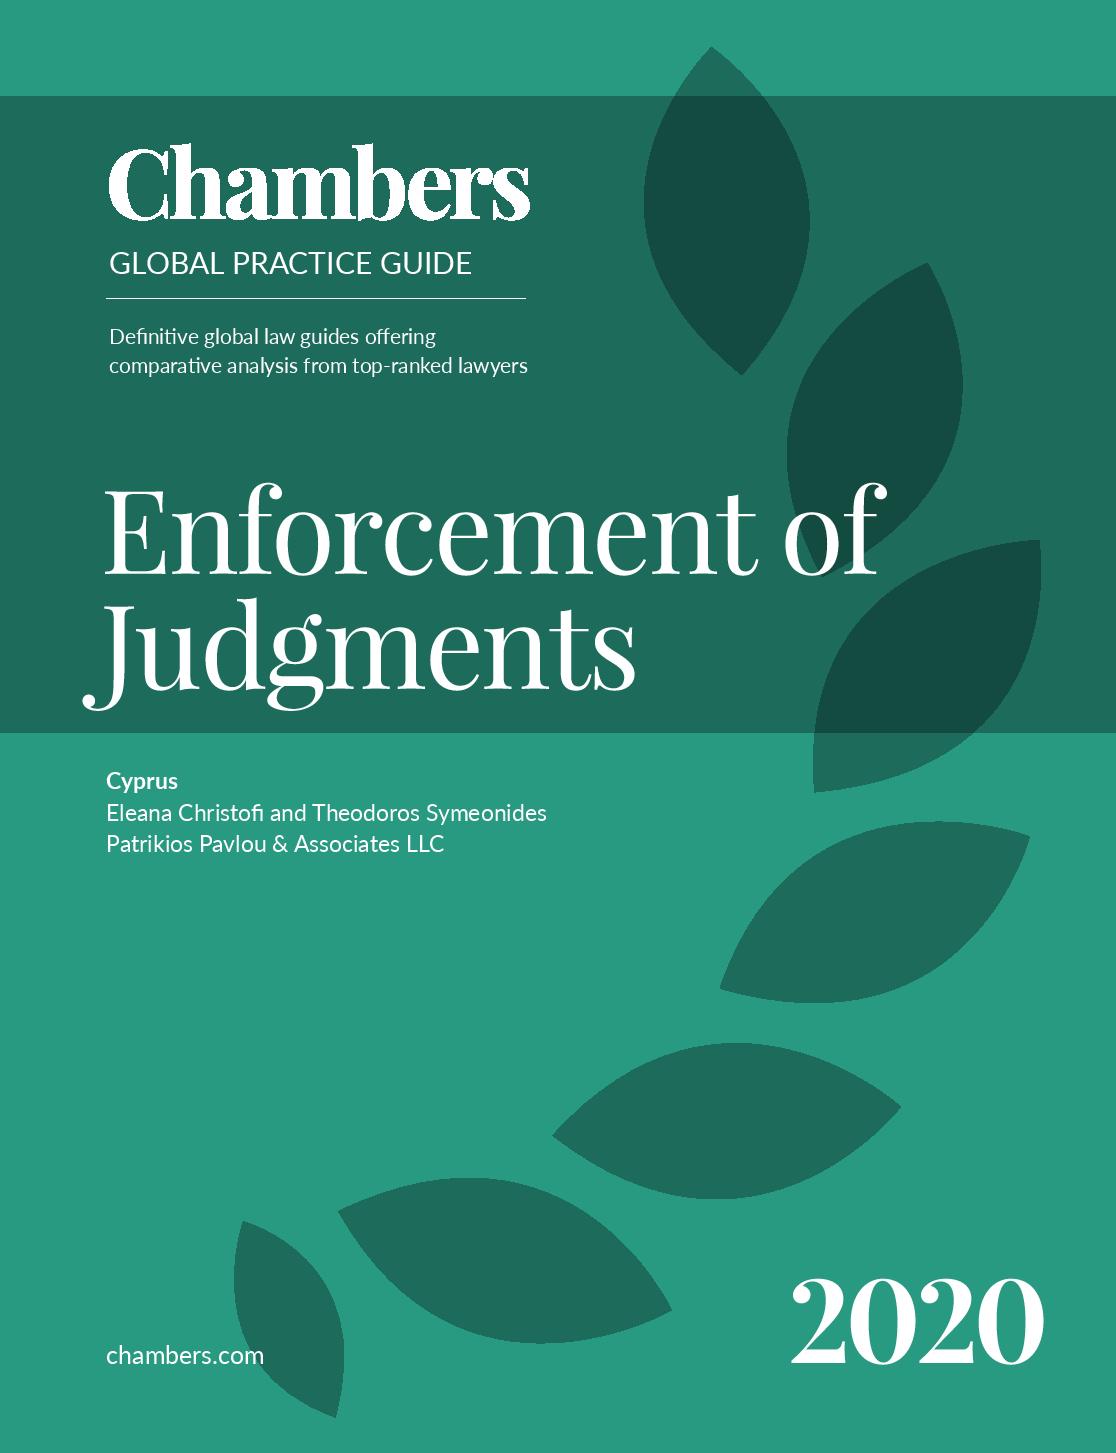 Patrikios Pavlou & Associates LLC: Enforcement of Judgments – Cyprus 2020